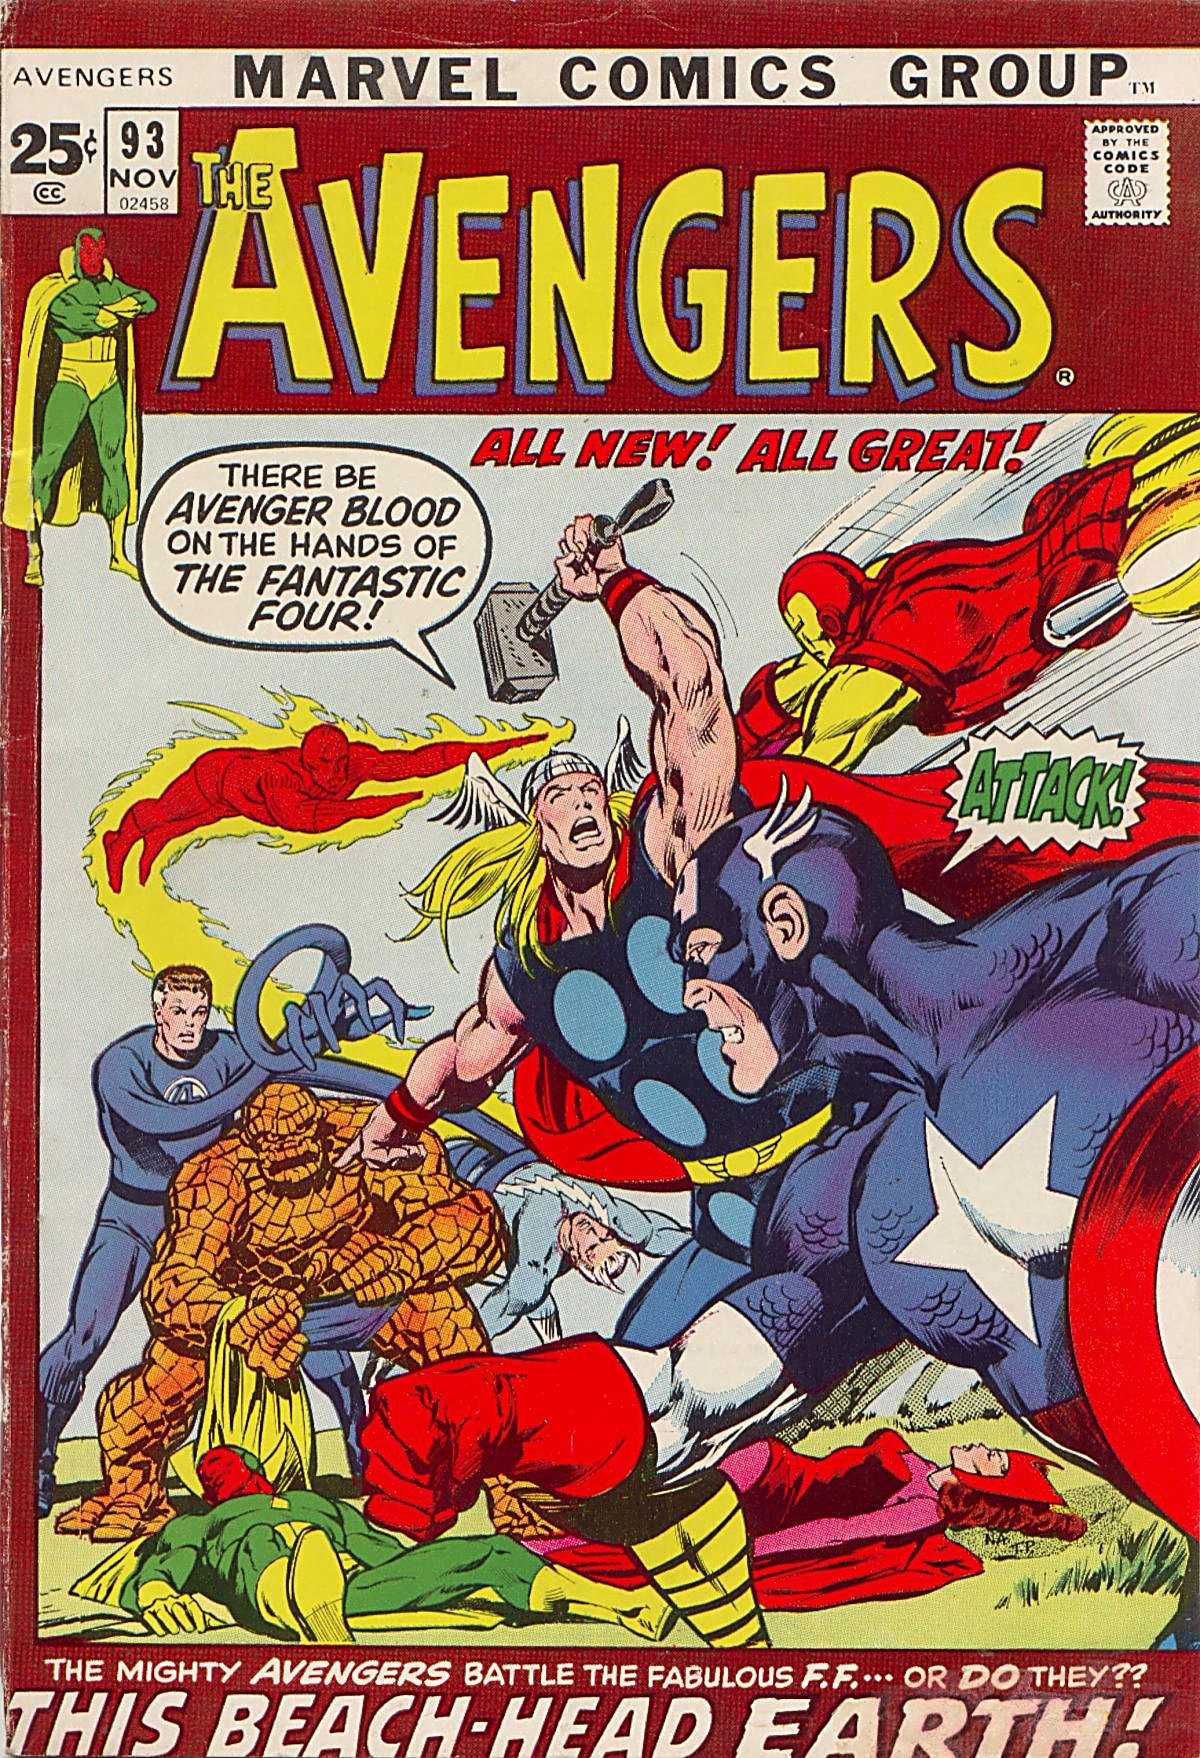 The Avengers Vol. 1 #93